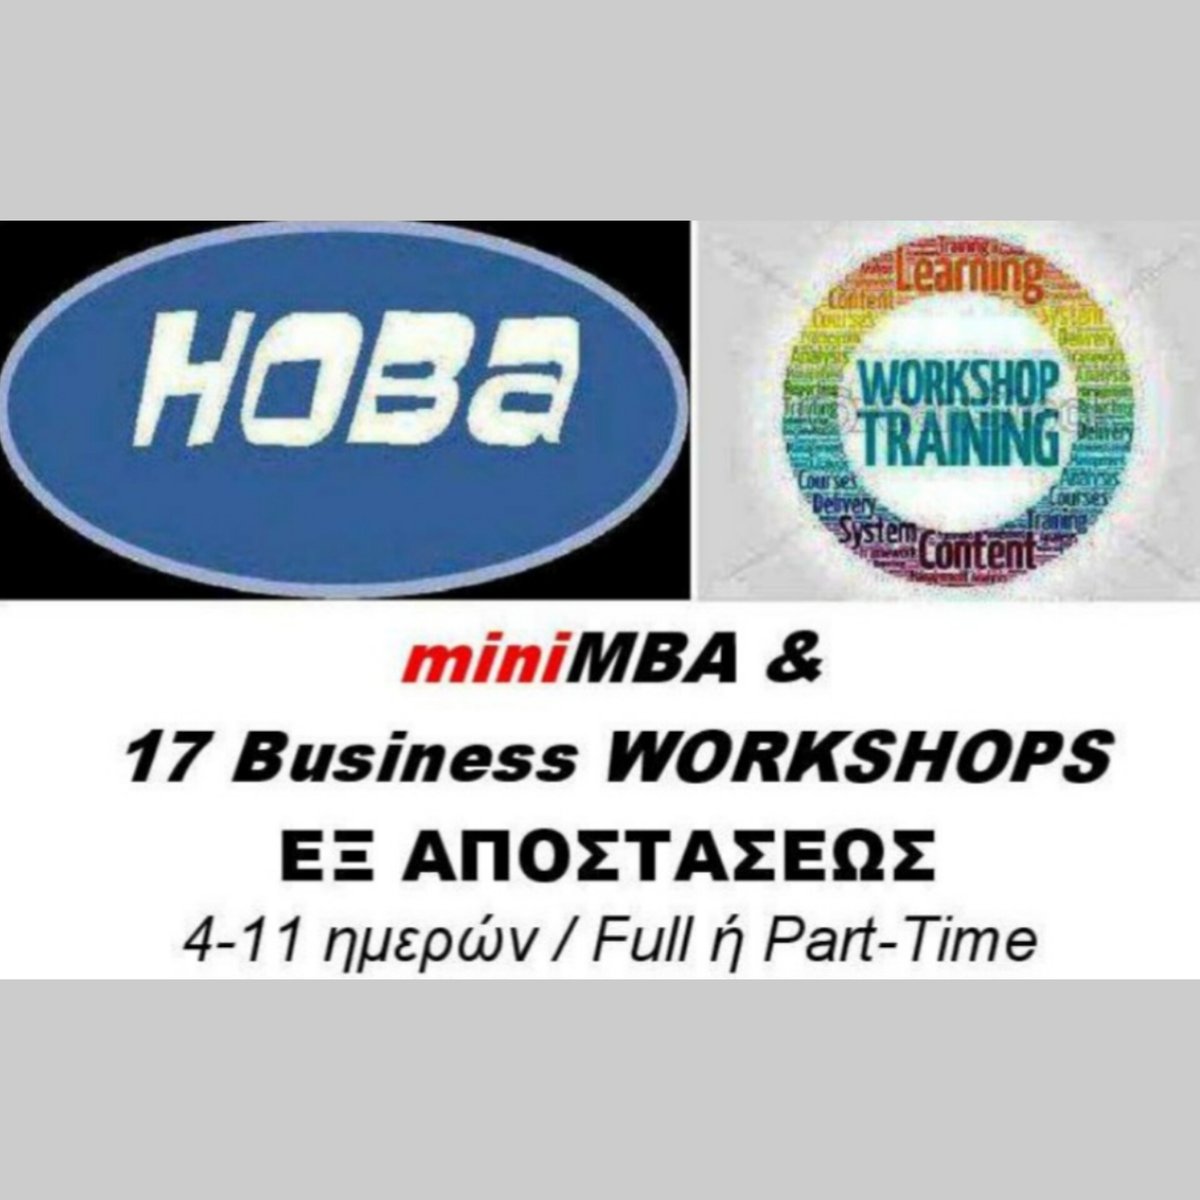 mini MBA, Courses & Workshops
Πληροφορίες: hoba.gr & info@hoba.gr

#Τρίπολη #tripoli #Τύρναβος #tyrnavos #tirnavos #Φθιώτιδα #fthiotida #phthiotida #Φλώρινα #florina #Χαλκίδα #chalkida #xalkida #Χανιά #chania #xania #Χίος #chios #xios #Ωραιόκαστρο #oraiokastro